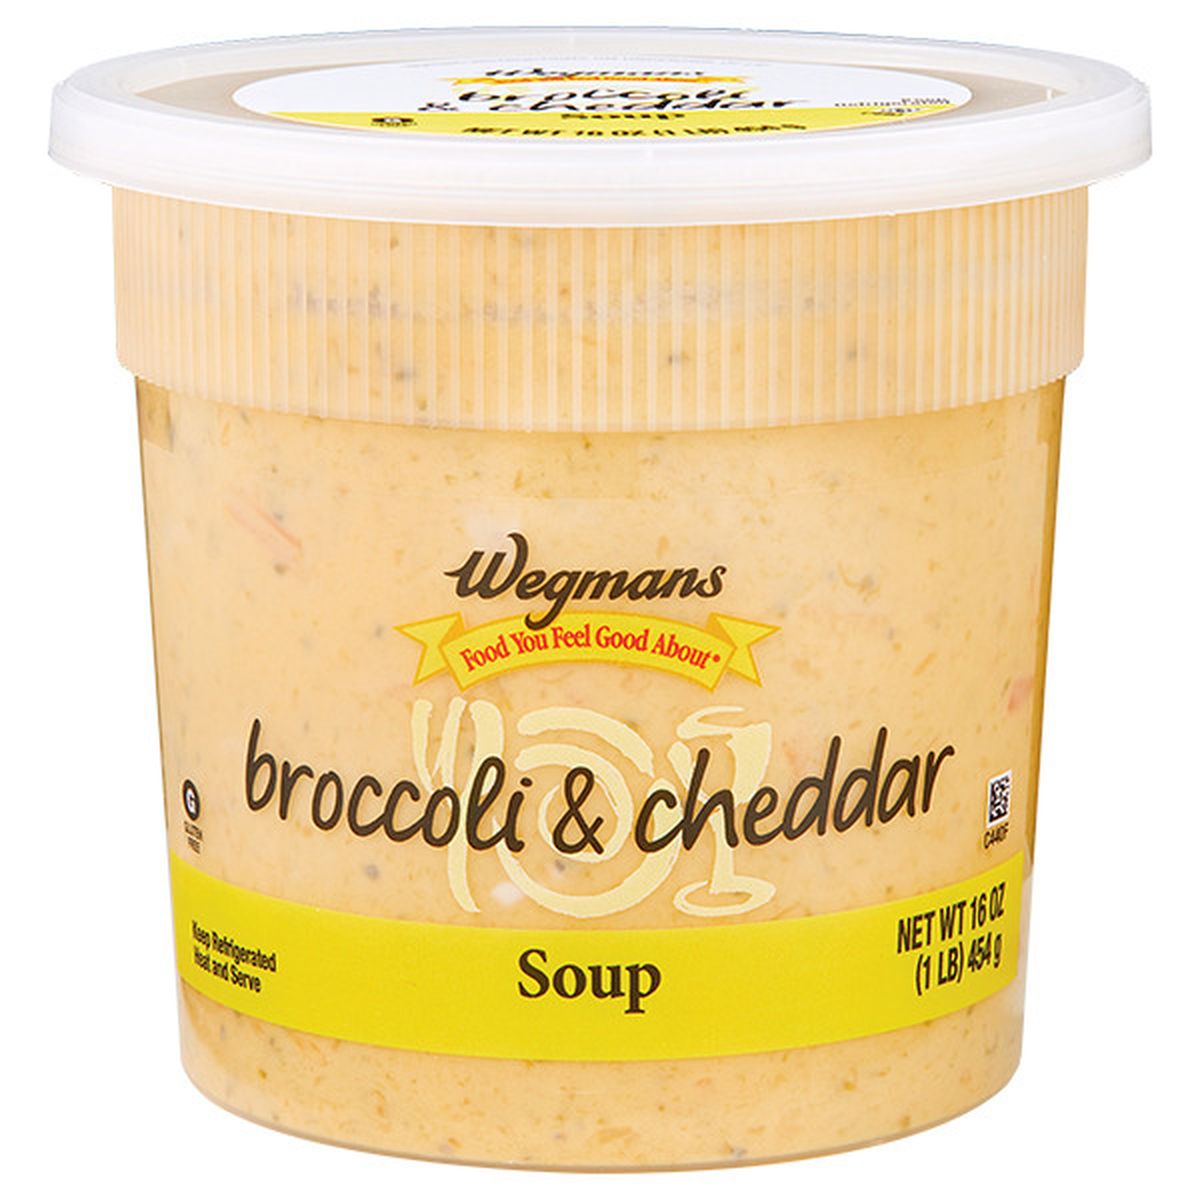 Calories in Wegmans Broccoli & Cheddar Soup